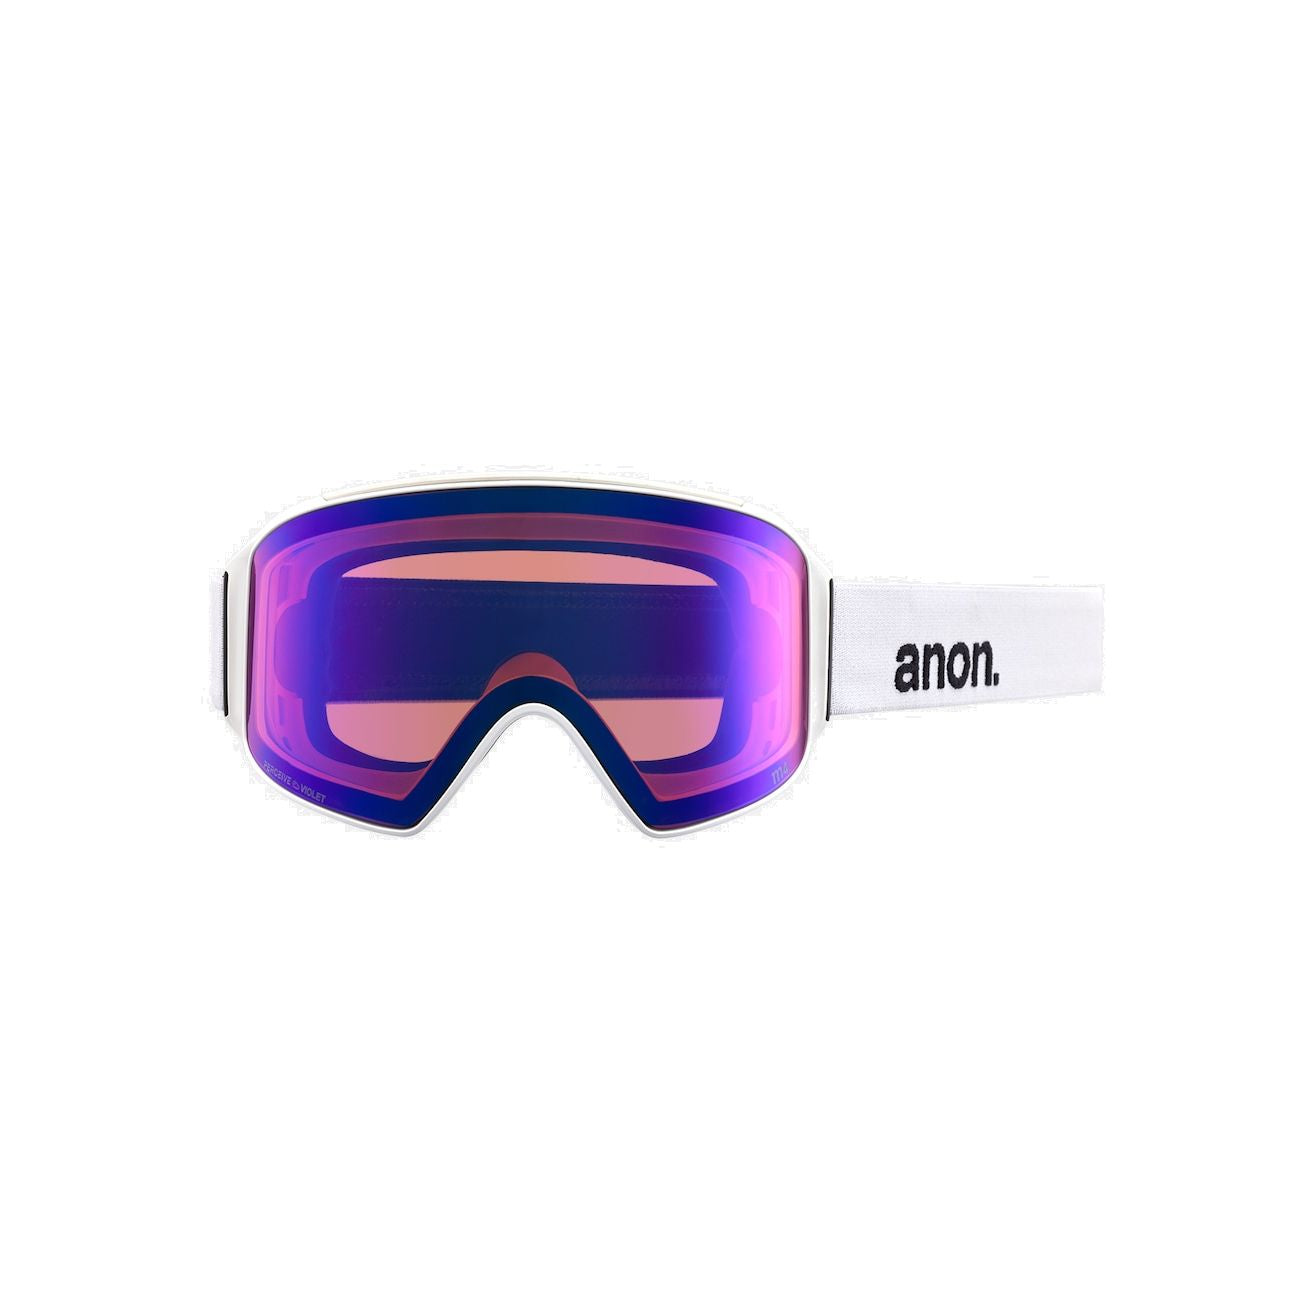 Anon M4 Cylindrical Goggles + Bonus Lens + MFI Face Mask - Openbox White Perceive Sunny Onyx Snow Goggles